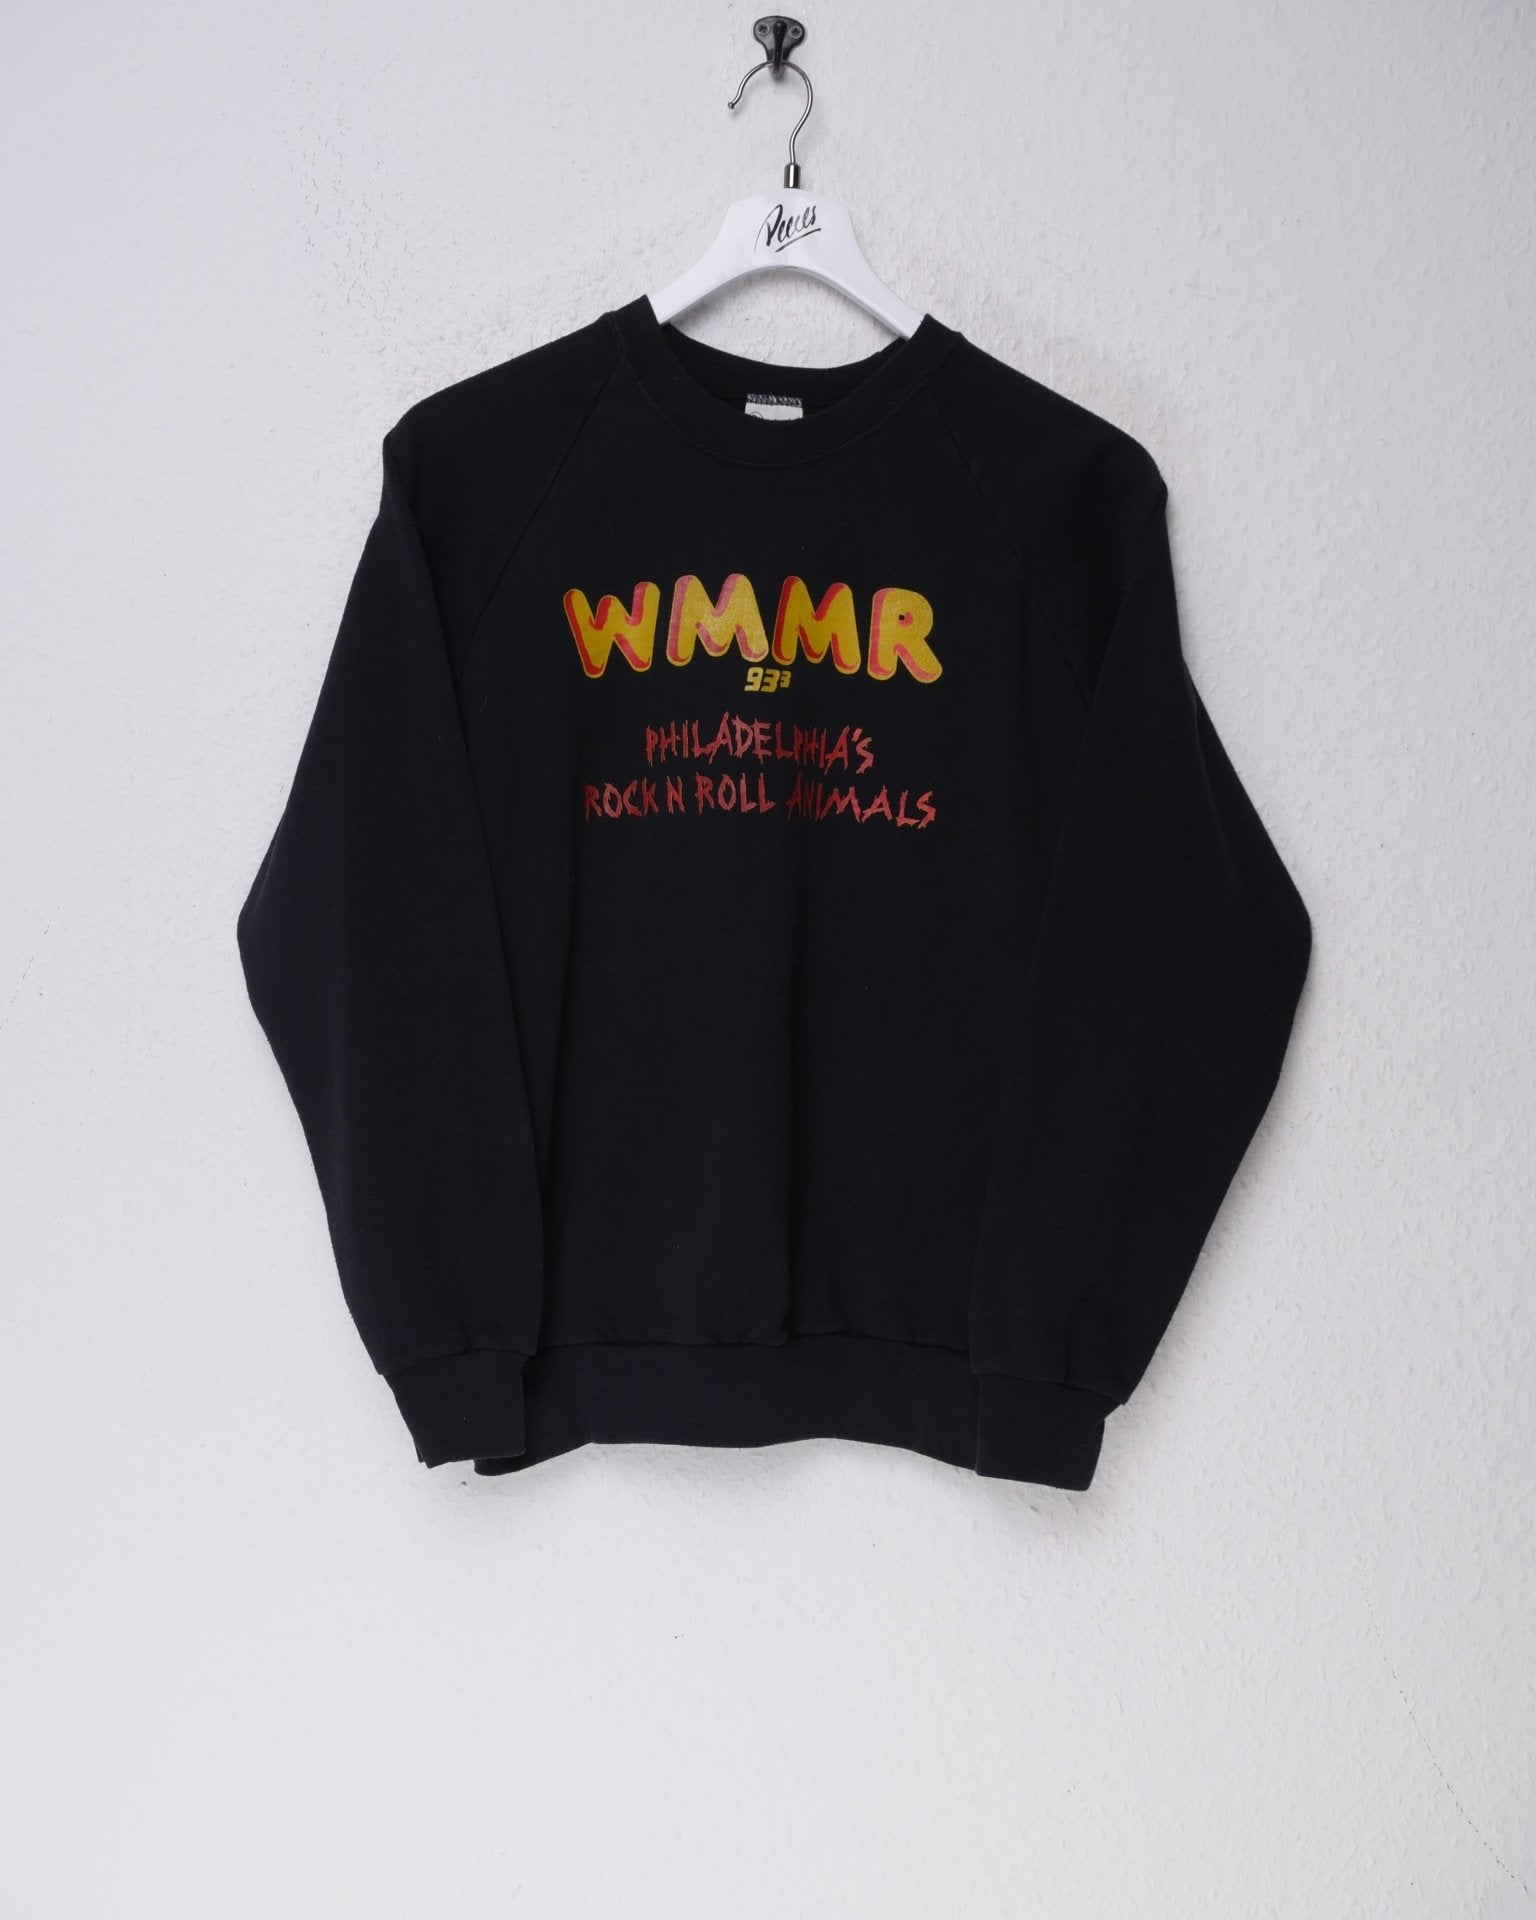 WMMR 93 Philadelphia's Rock N Roll Animals printed Spellout Vintage Sweater - Peeces